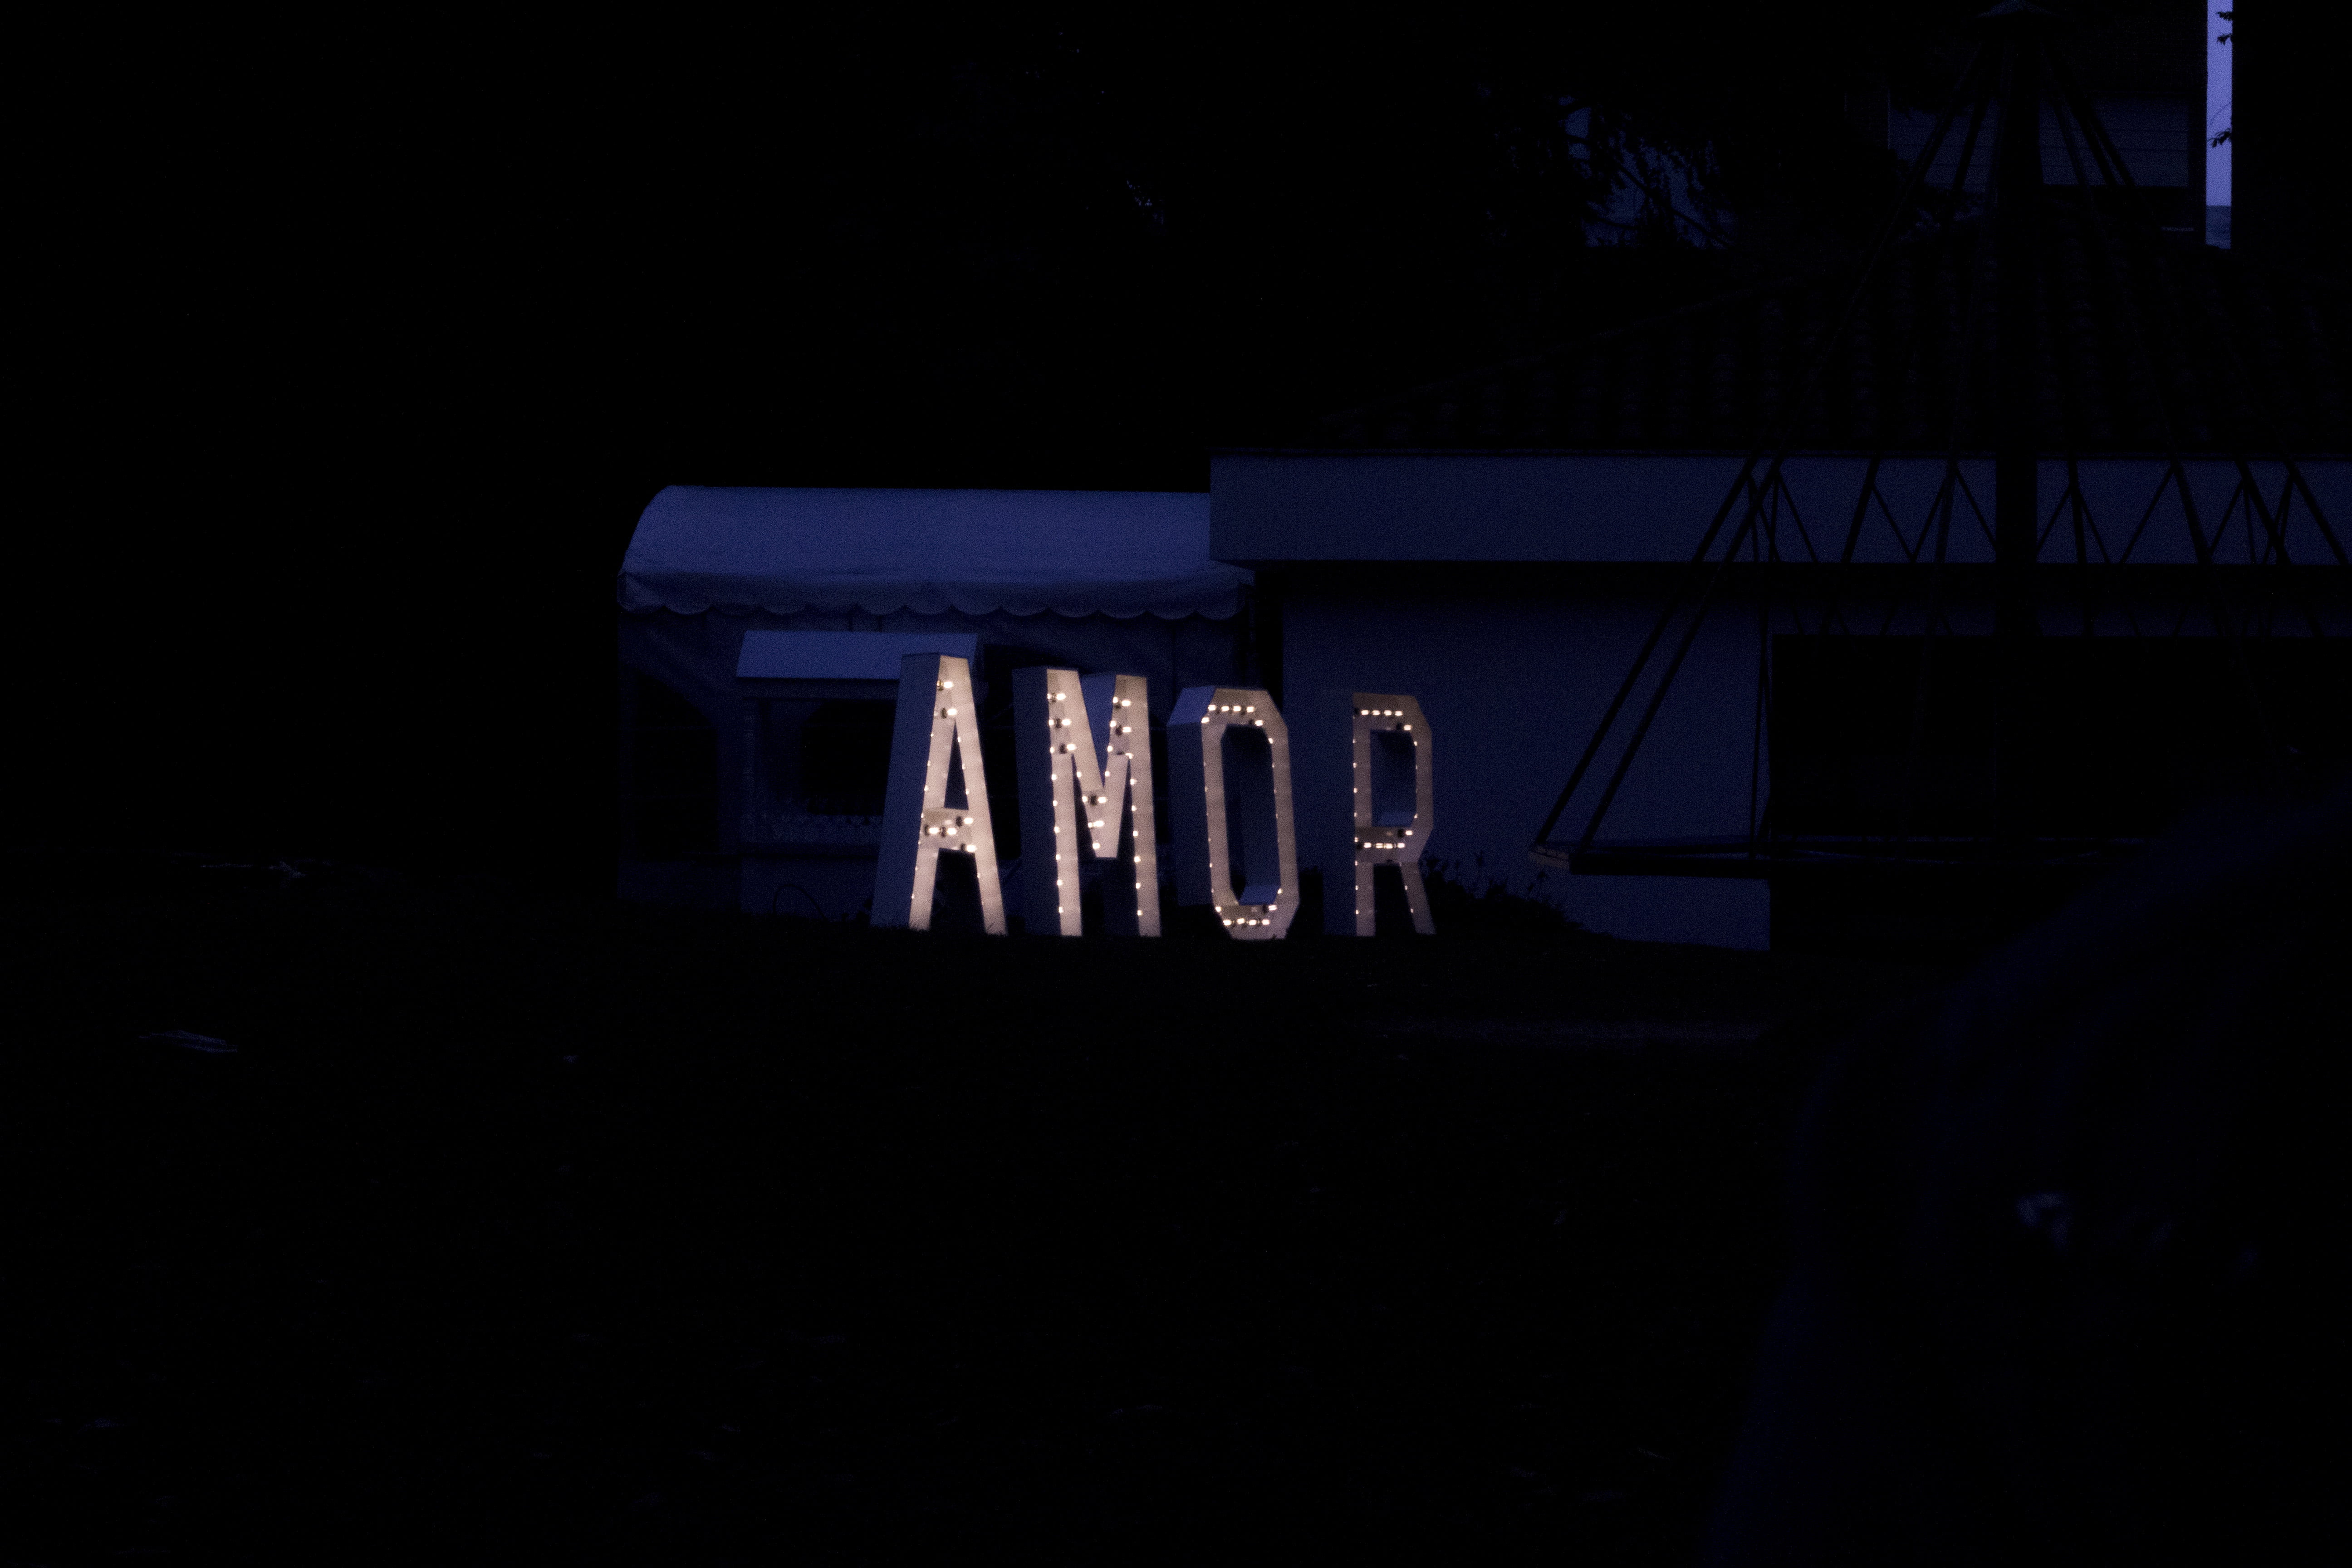 Amor signage, love, letters, night, dark, neon Light, illuminated